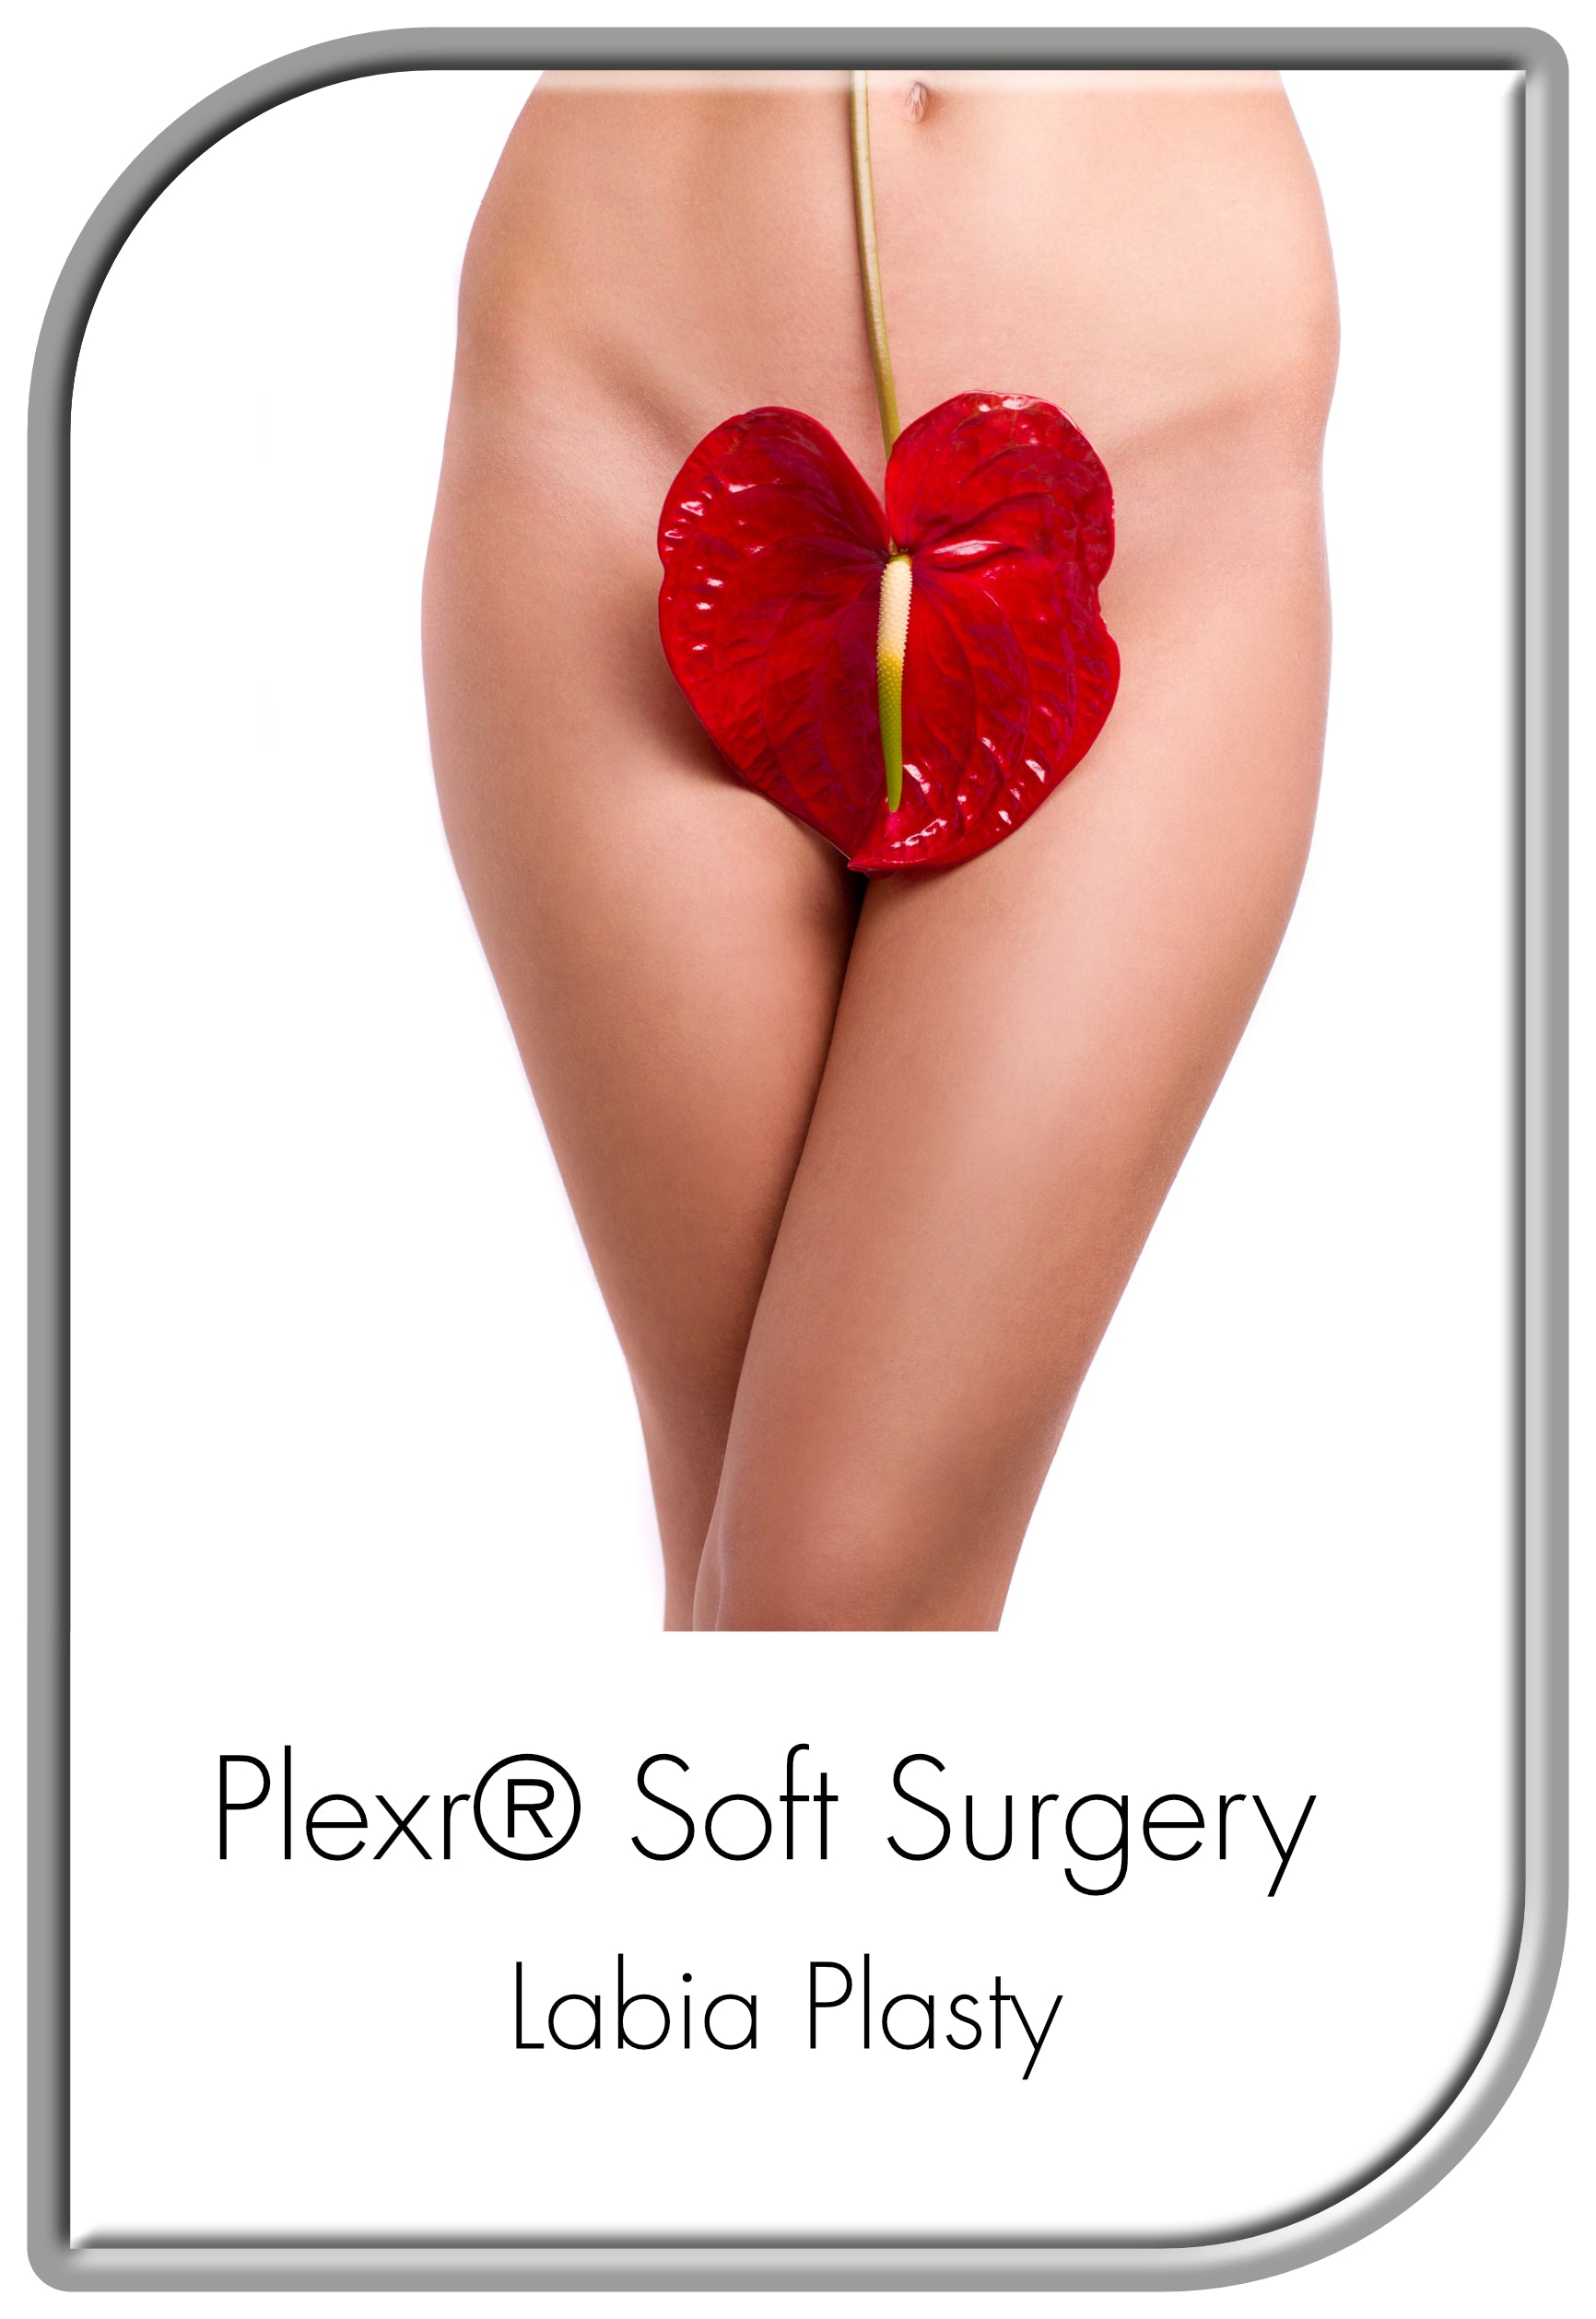 Vaginal Labia Plasty - Plexr® Soft Surgery